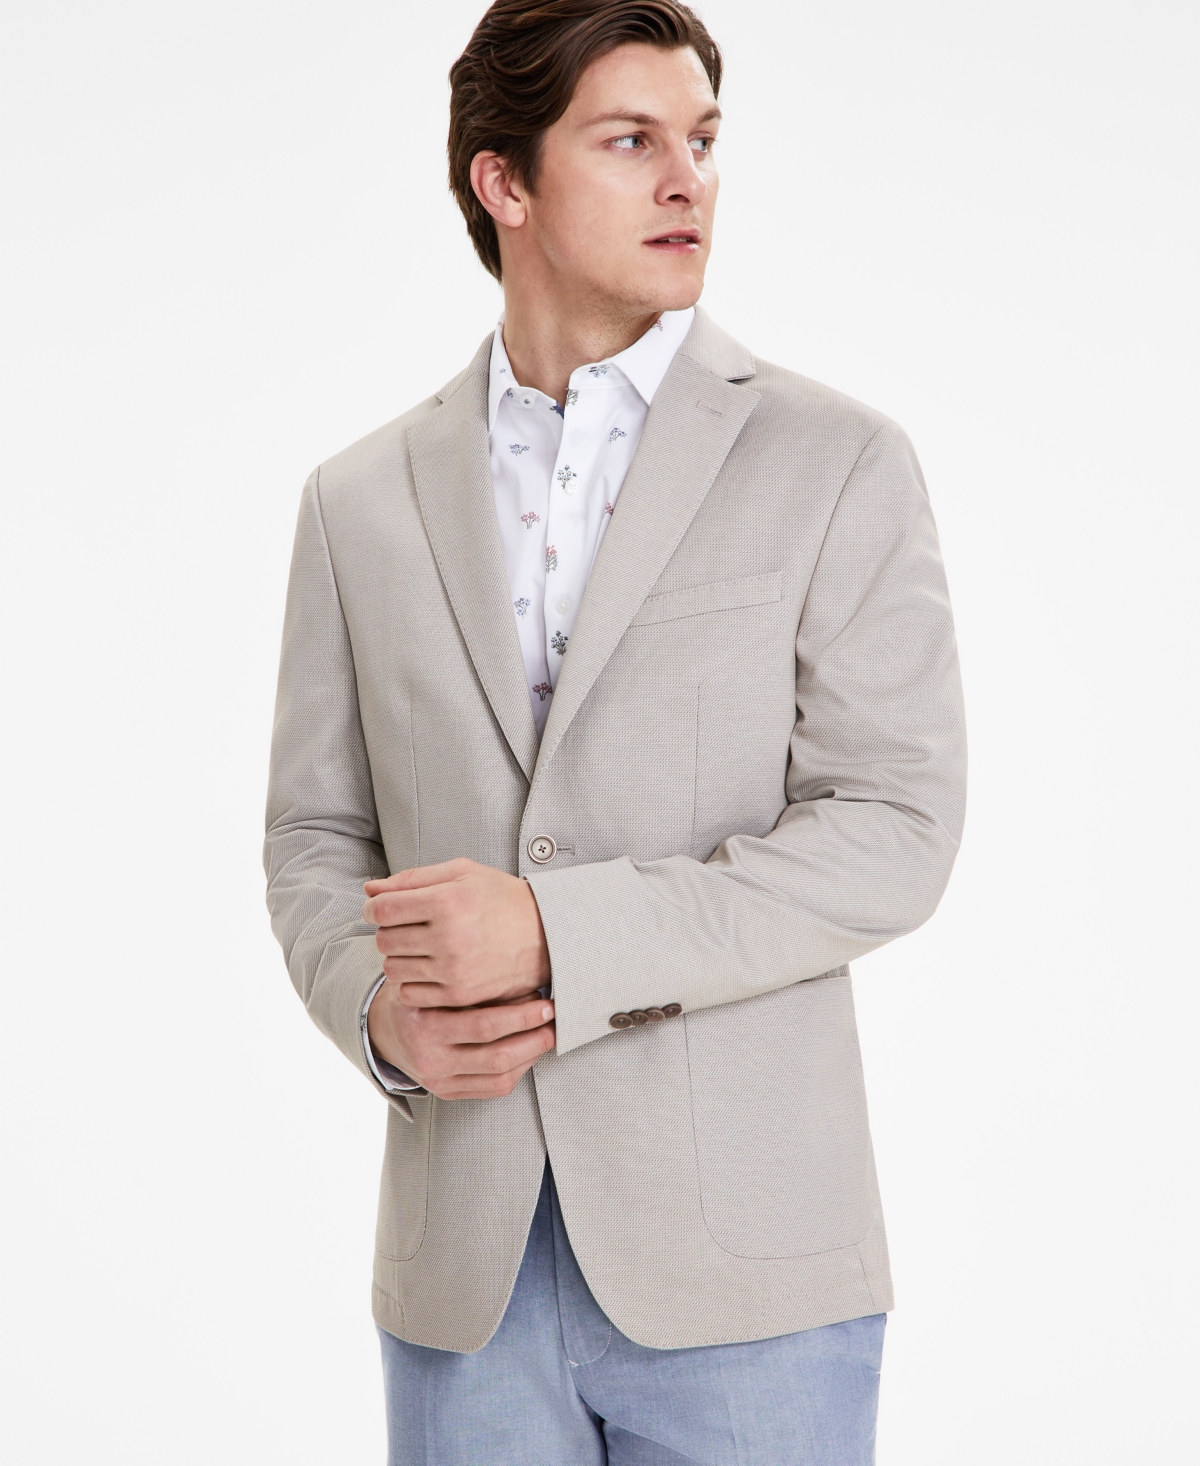 Men's Slim-Fit Knit Sport Coat, Created for Macy's - Grey Navy